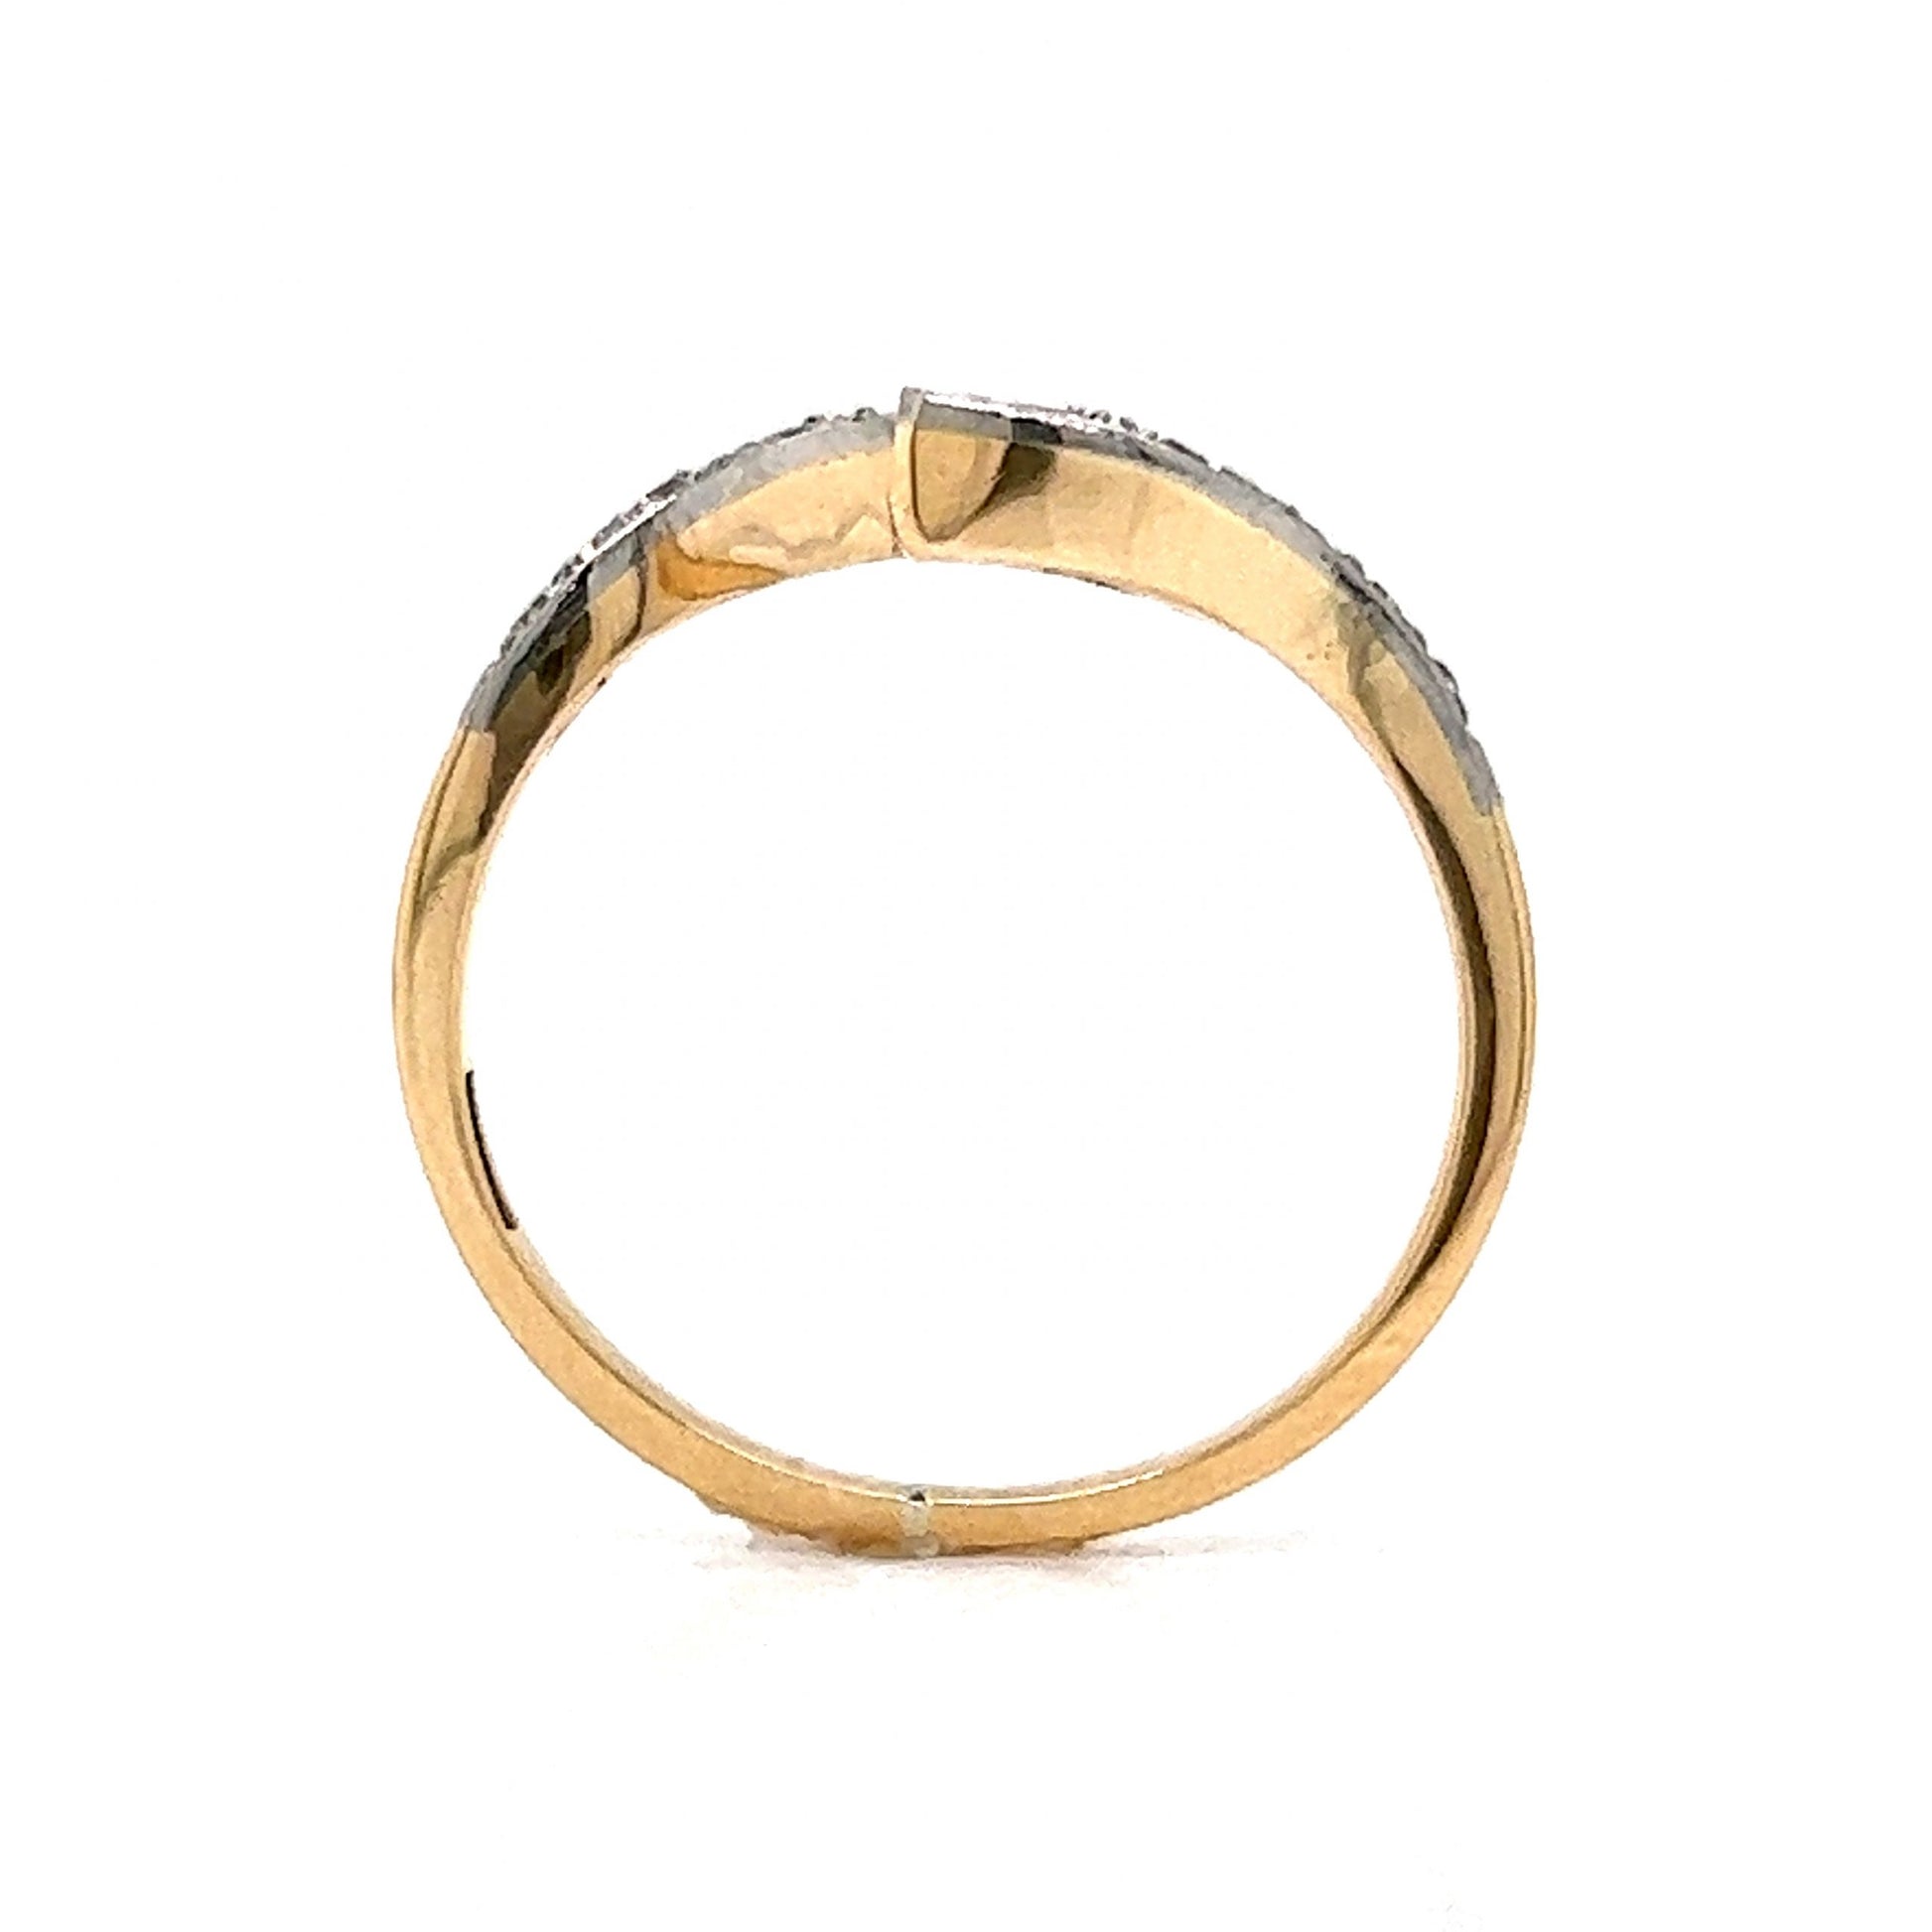 Victorian Open Diamond Ring in 14k Yellow & White GoldComposition: 14 Karat Yellow Gold/14 Karat White Gold Ring Size: 7 Total Diamond Weight: .15ct Total Gram Weight: 2.0 g Inscription: 585
      